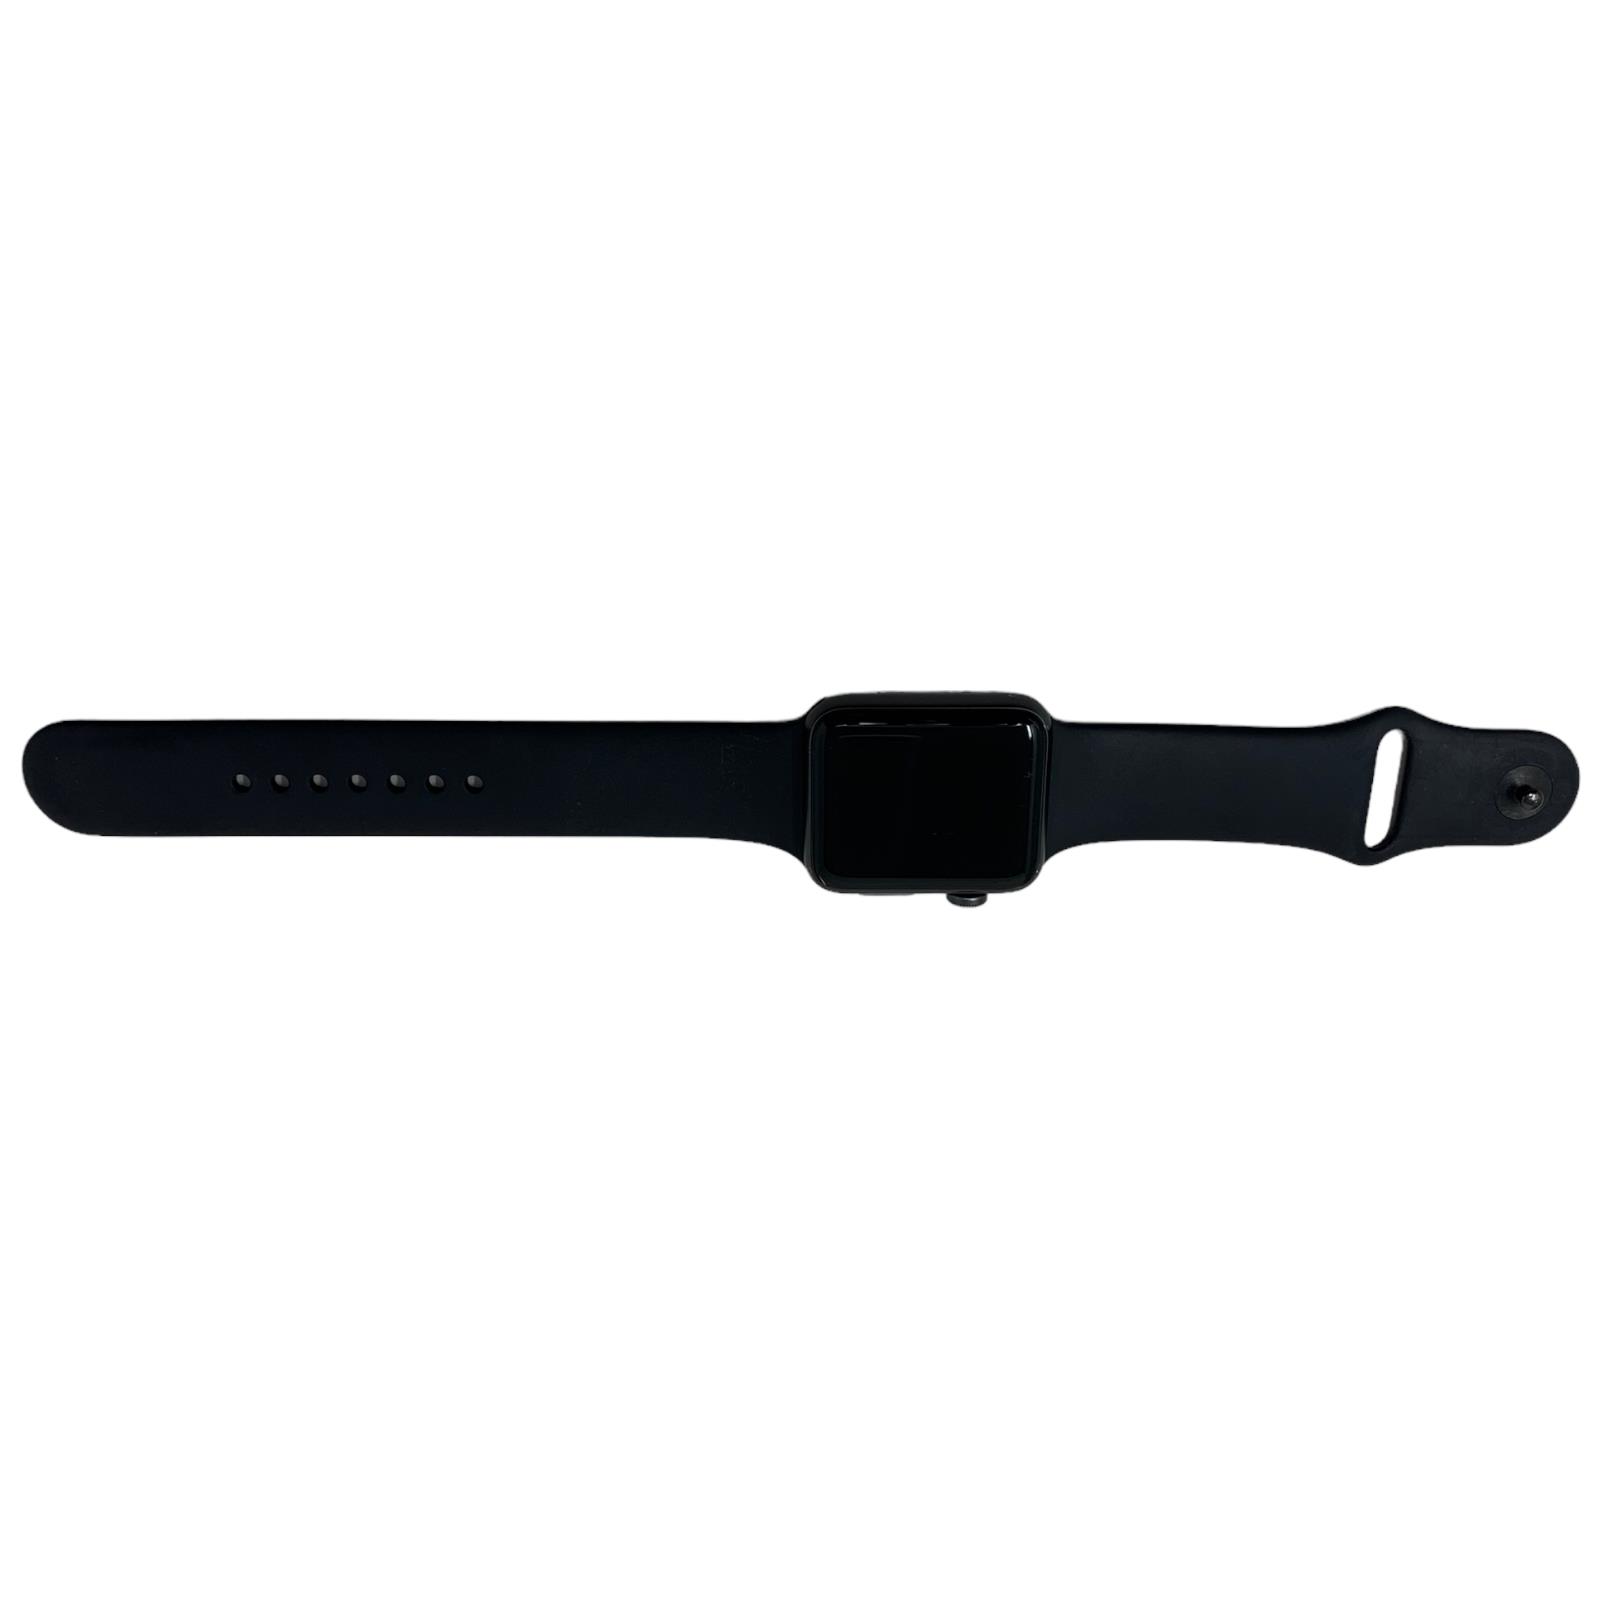 RSD6643 Apple Watch Serie 3 42mm GR. AB Gar. 12M Fattura